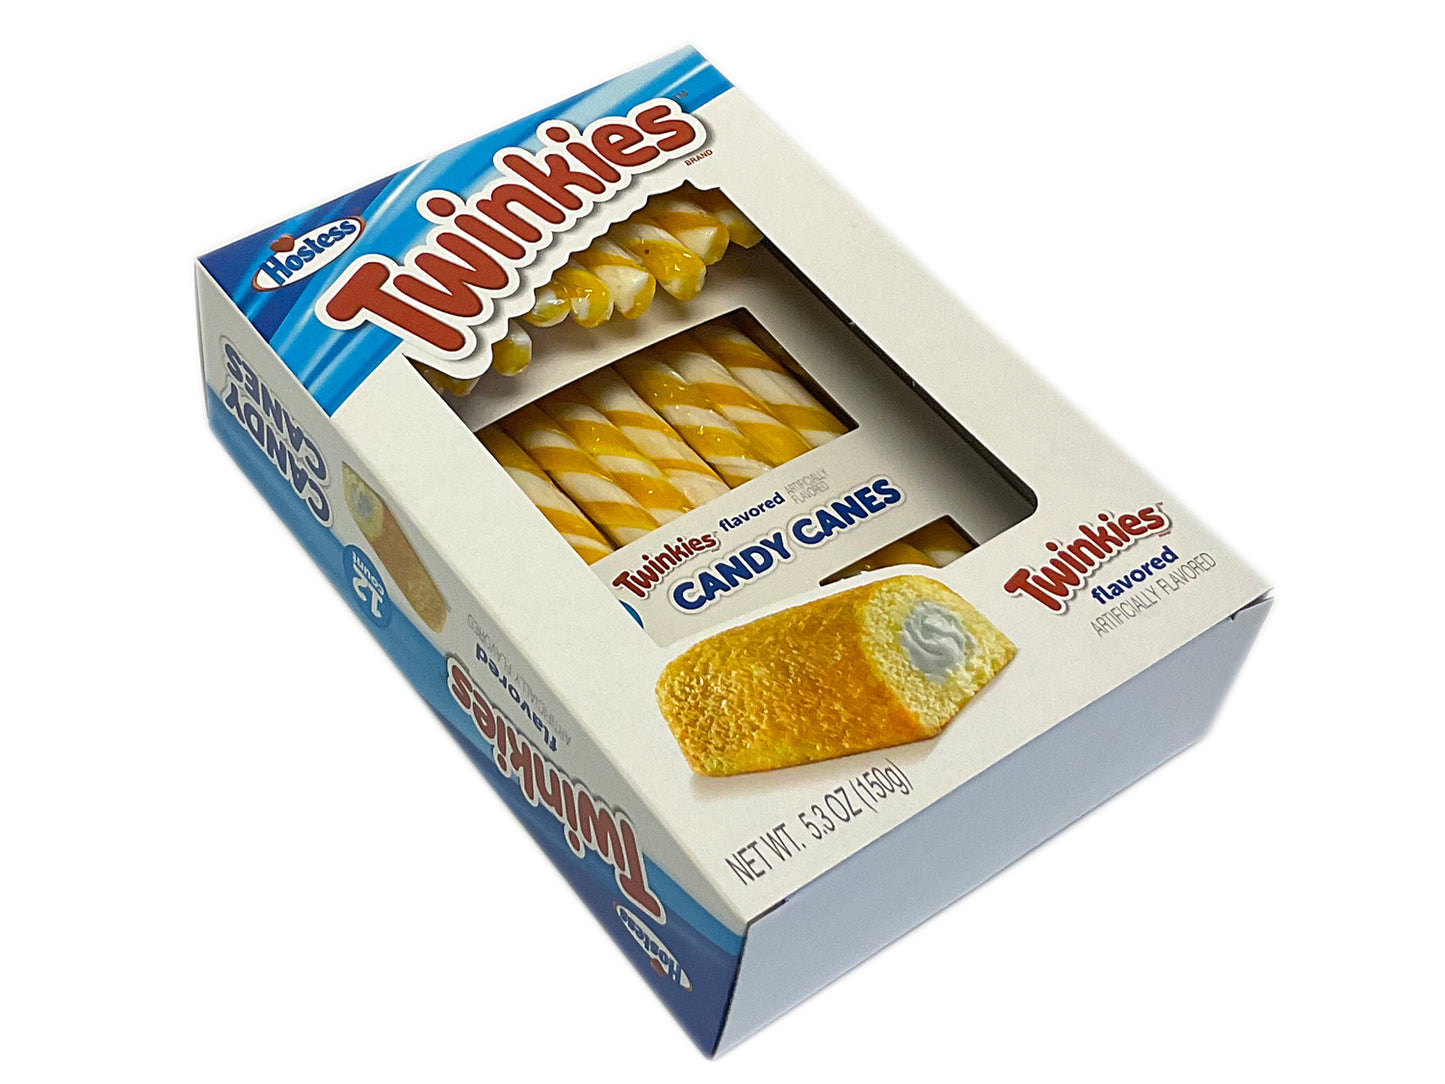 Candy Canes - Twinkies - 5.3 oz box